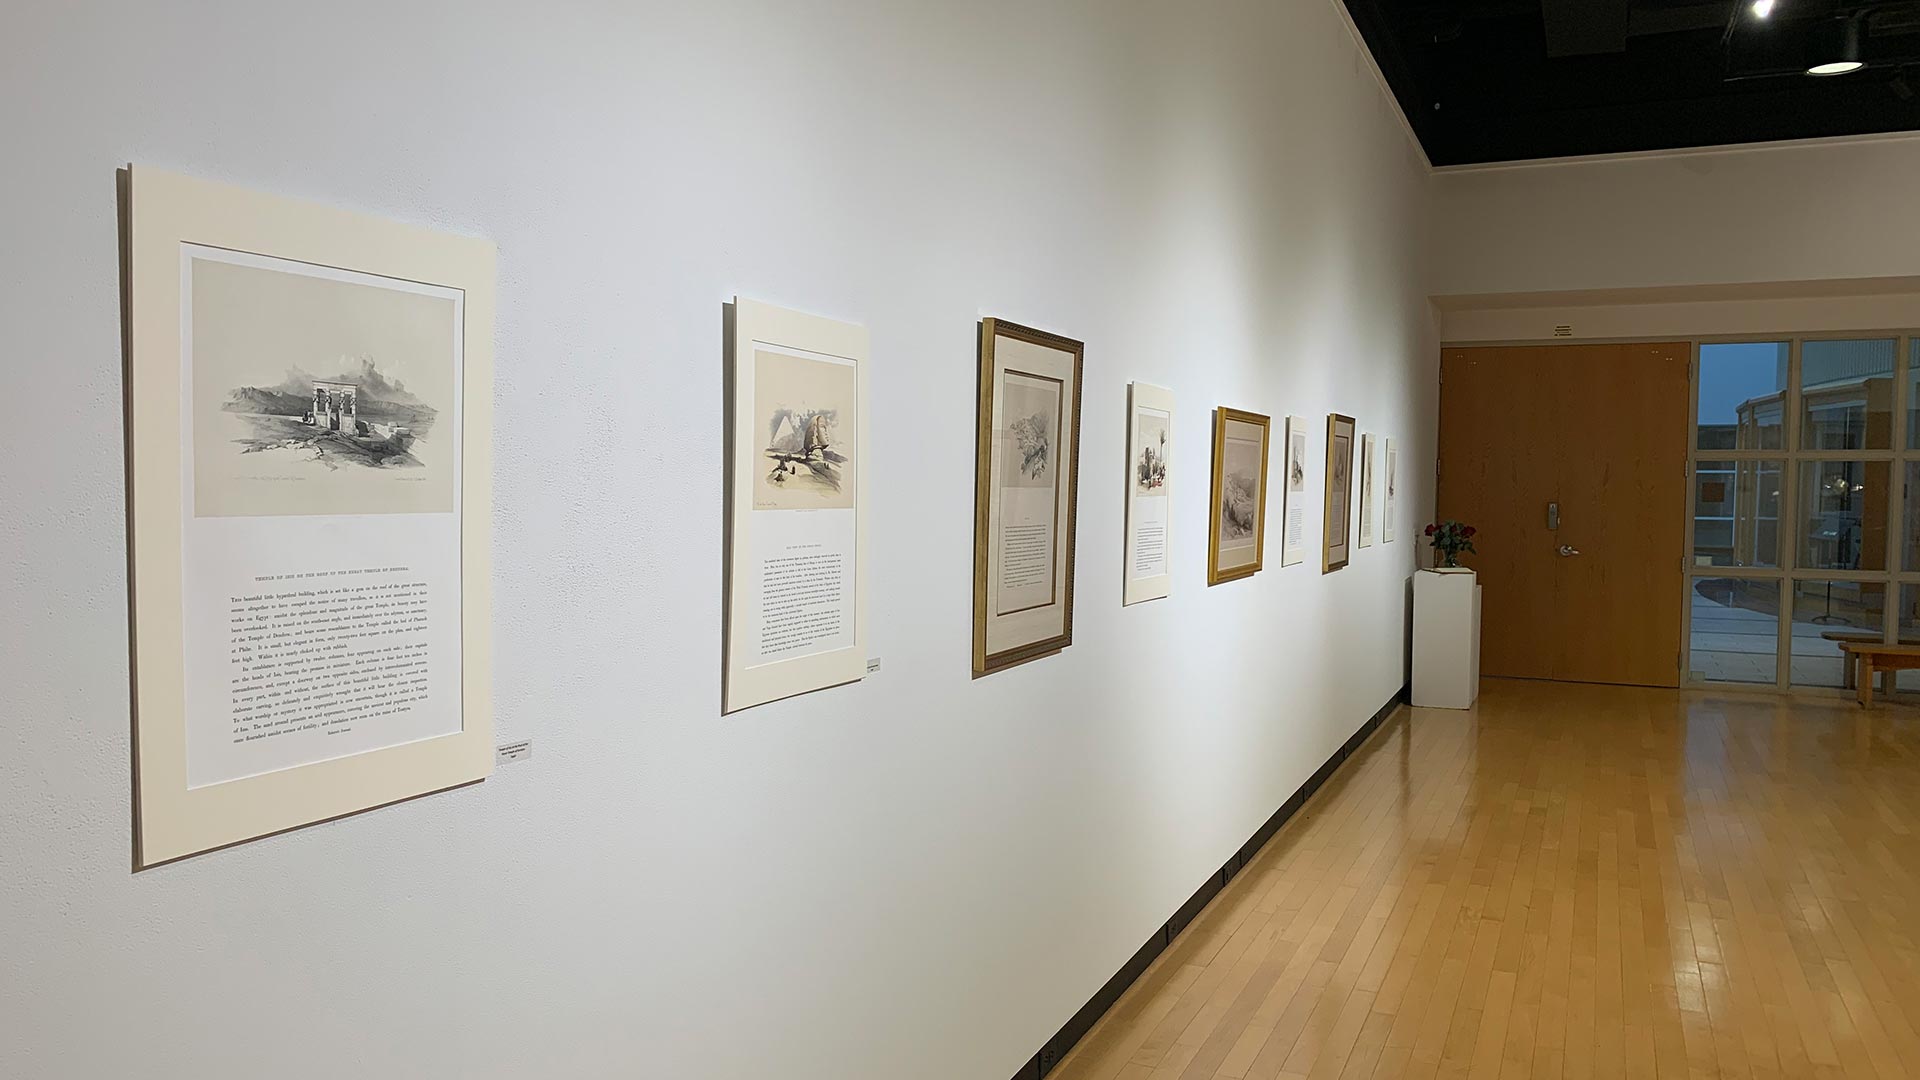 Interior gallery view of David Roberts exhibit at Houghton University.